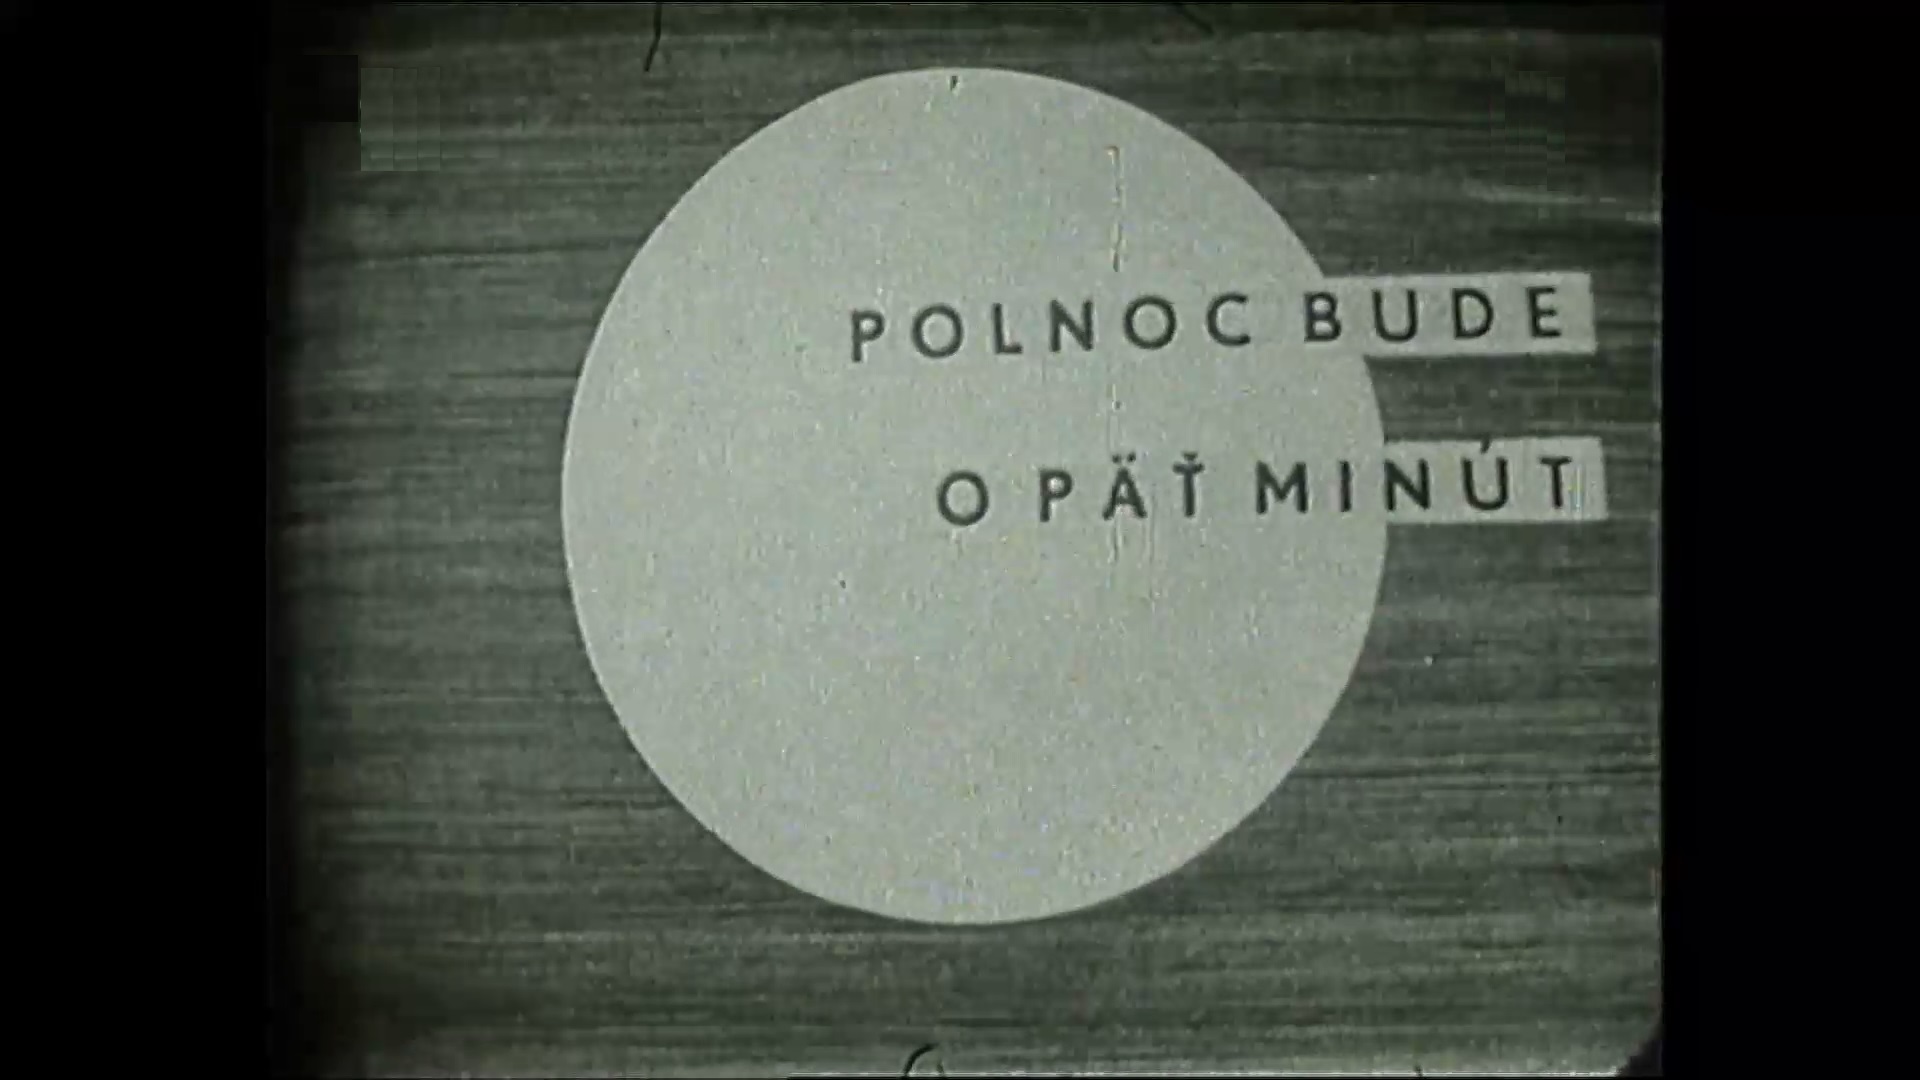 Stiahni si Filmy CZ/SK dabing Polnoc bude o pat minut (1962)(SK)[TvRip] = CSFD 84%